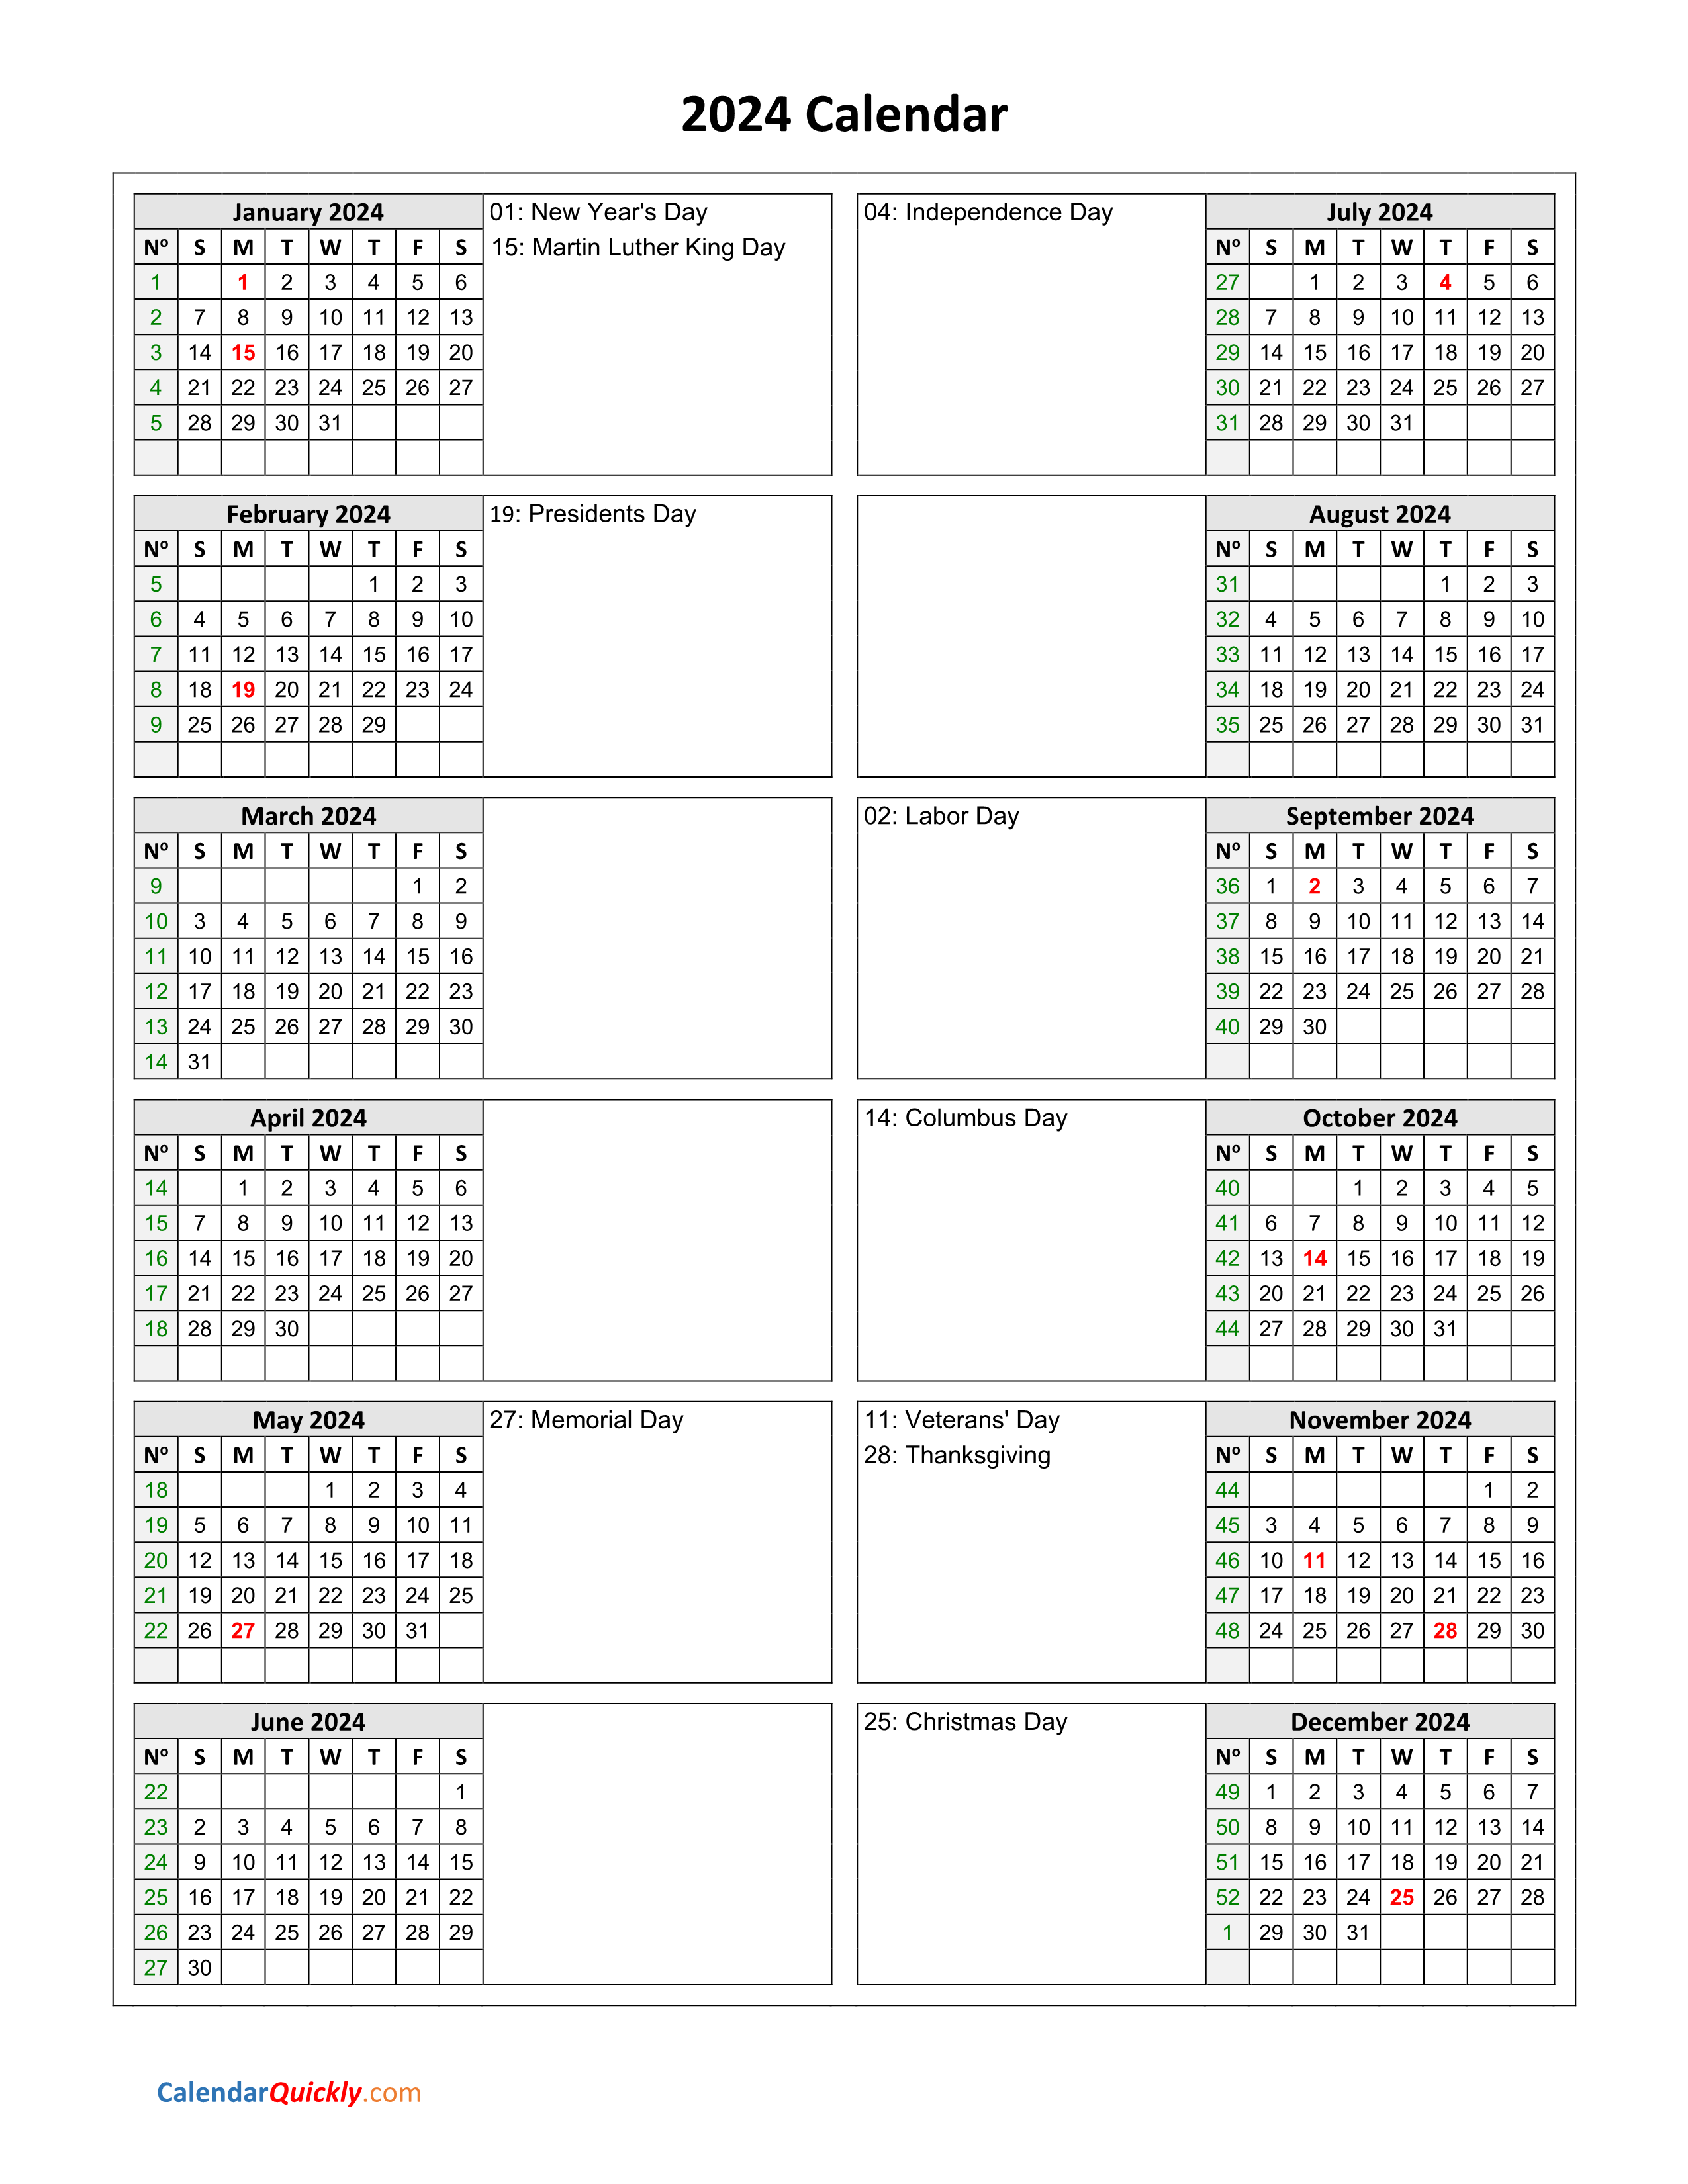 Printable Calendars 2024 Pdf Calendar 2024 With Federal Holidays - Free Printable 2024 Calendar With Holidays And Fun Facts